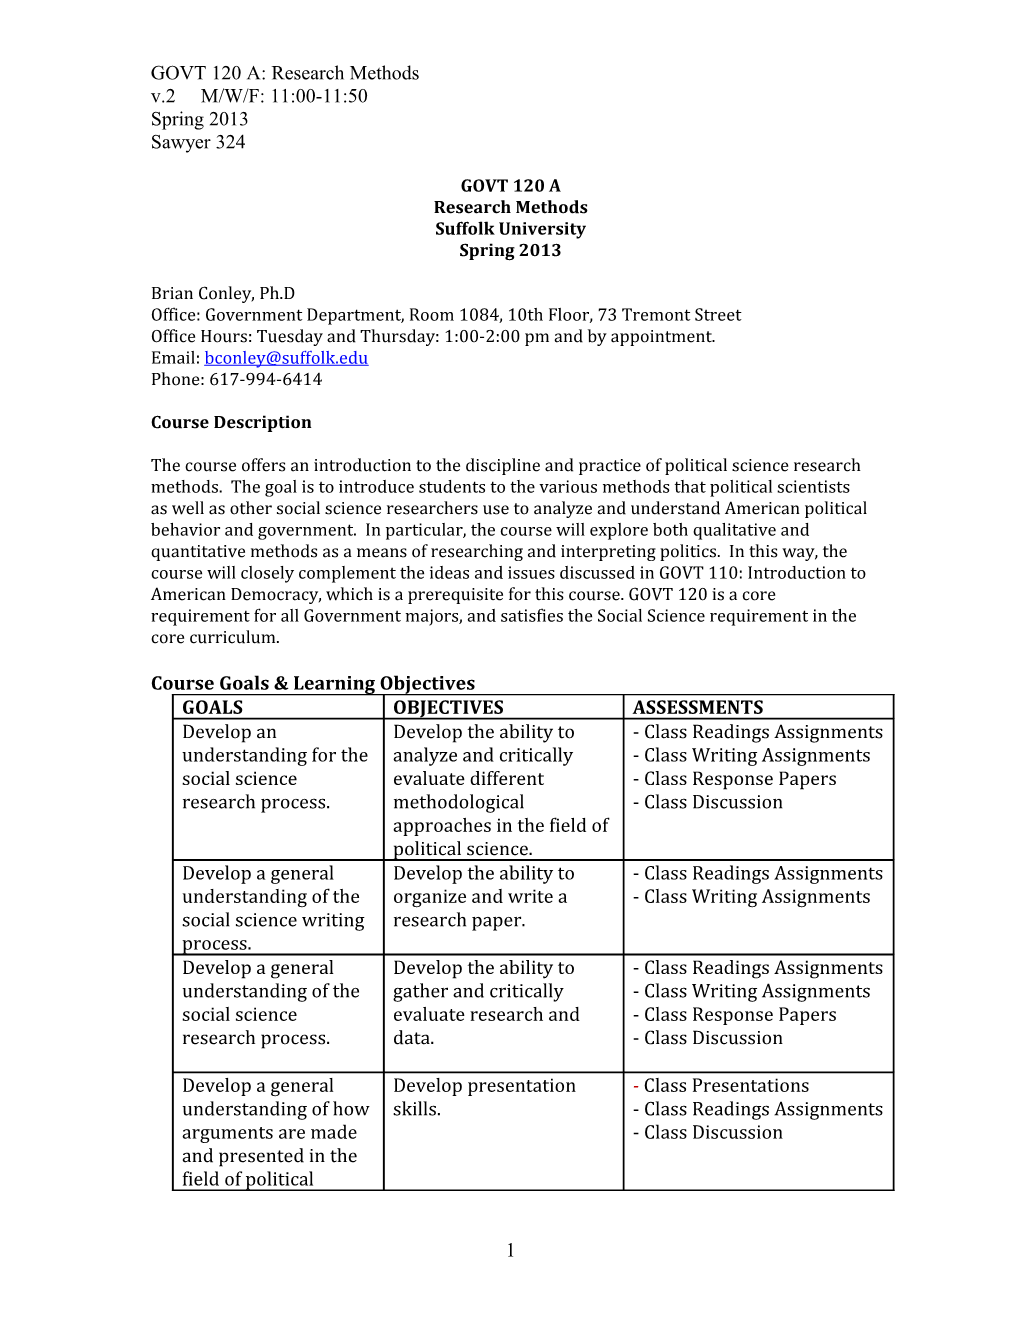 GOVT 120 A: Research Methods V.2 M/W/F: 11:00-11:50 Spring 2013